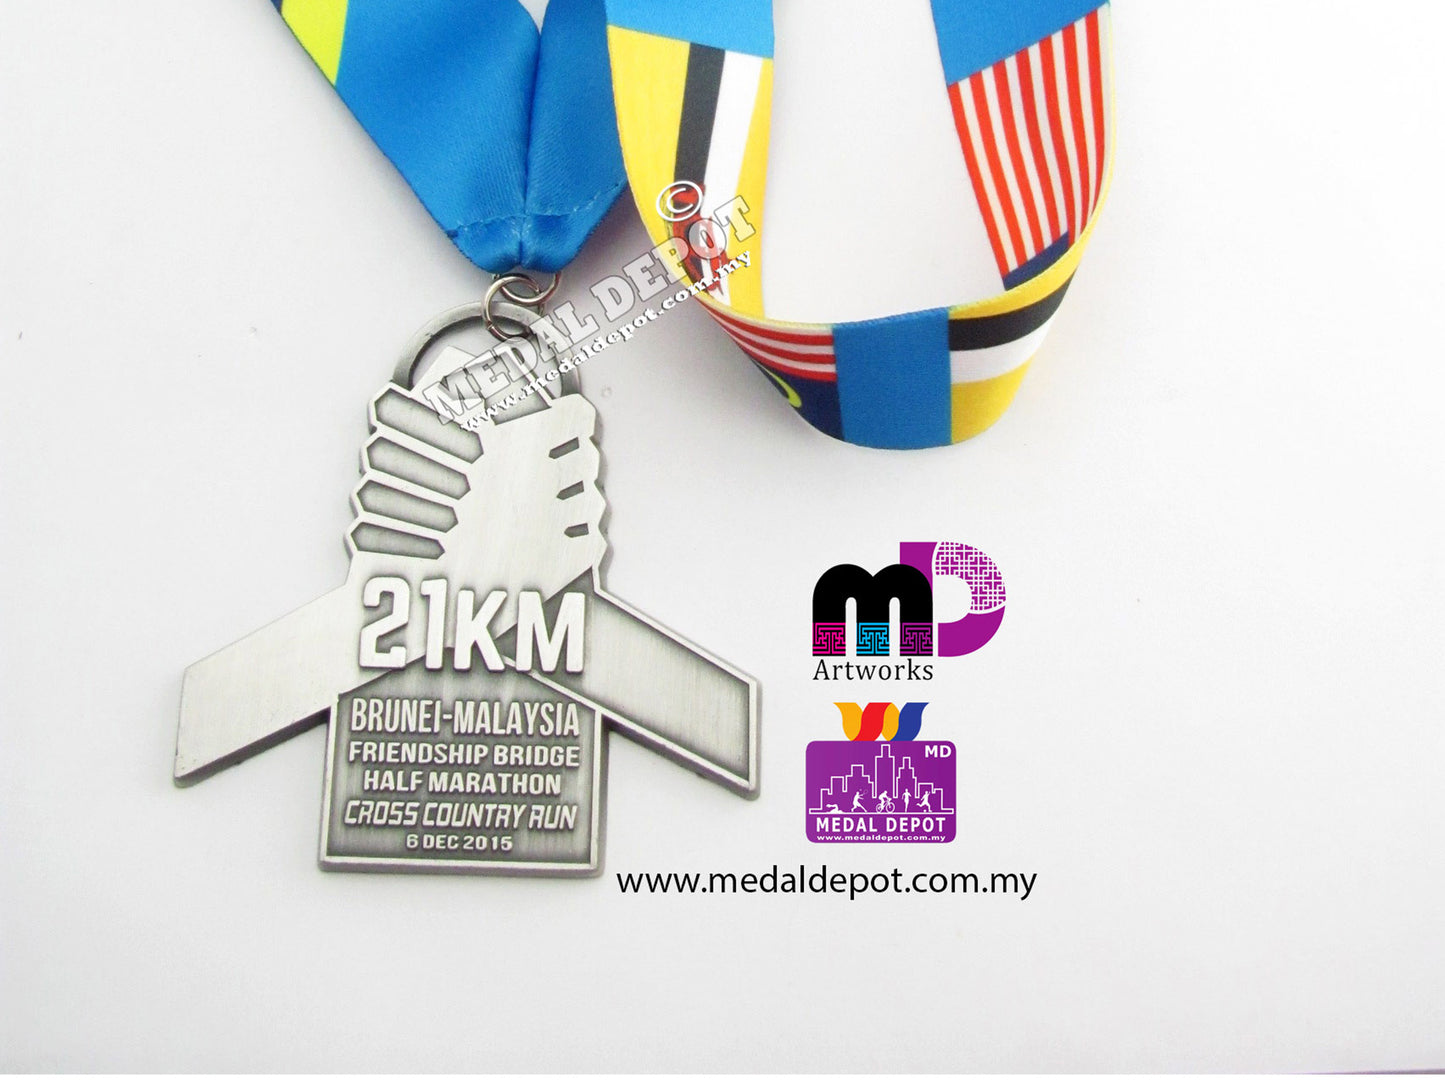 Brunei-Malaysia Friendship Bridge Half Marathon 2015